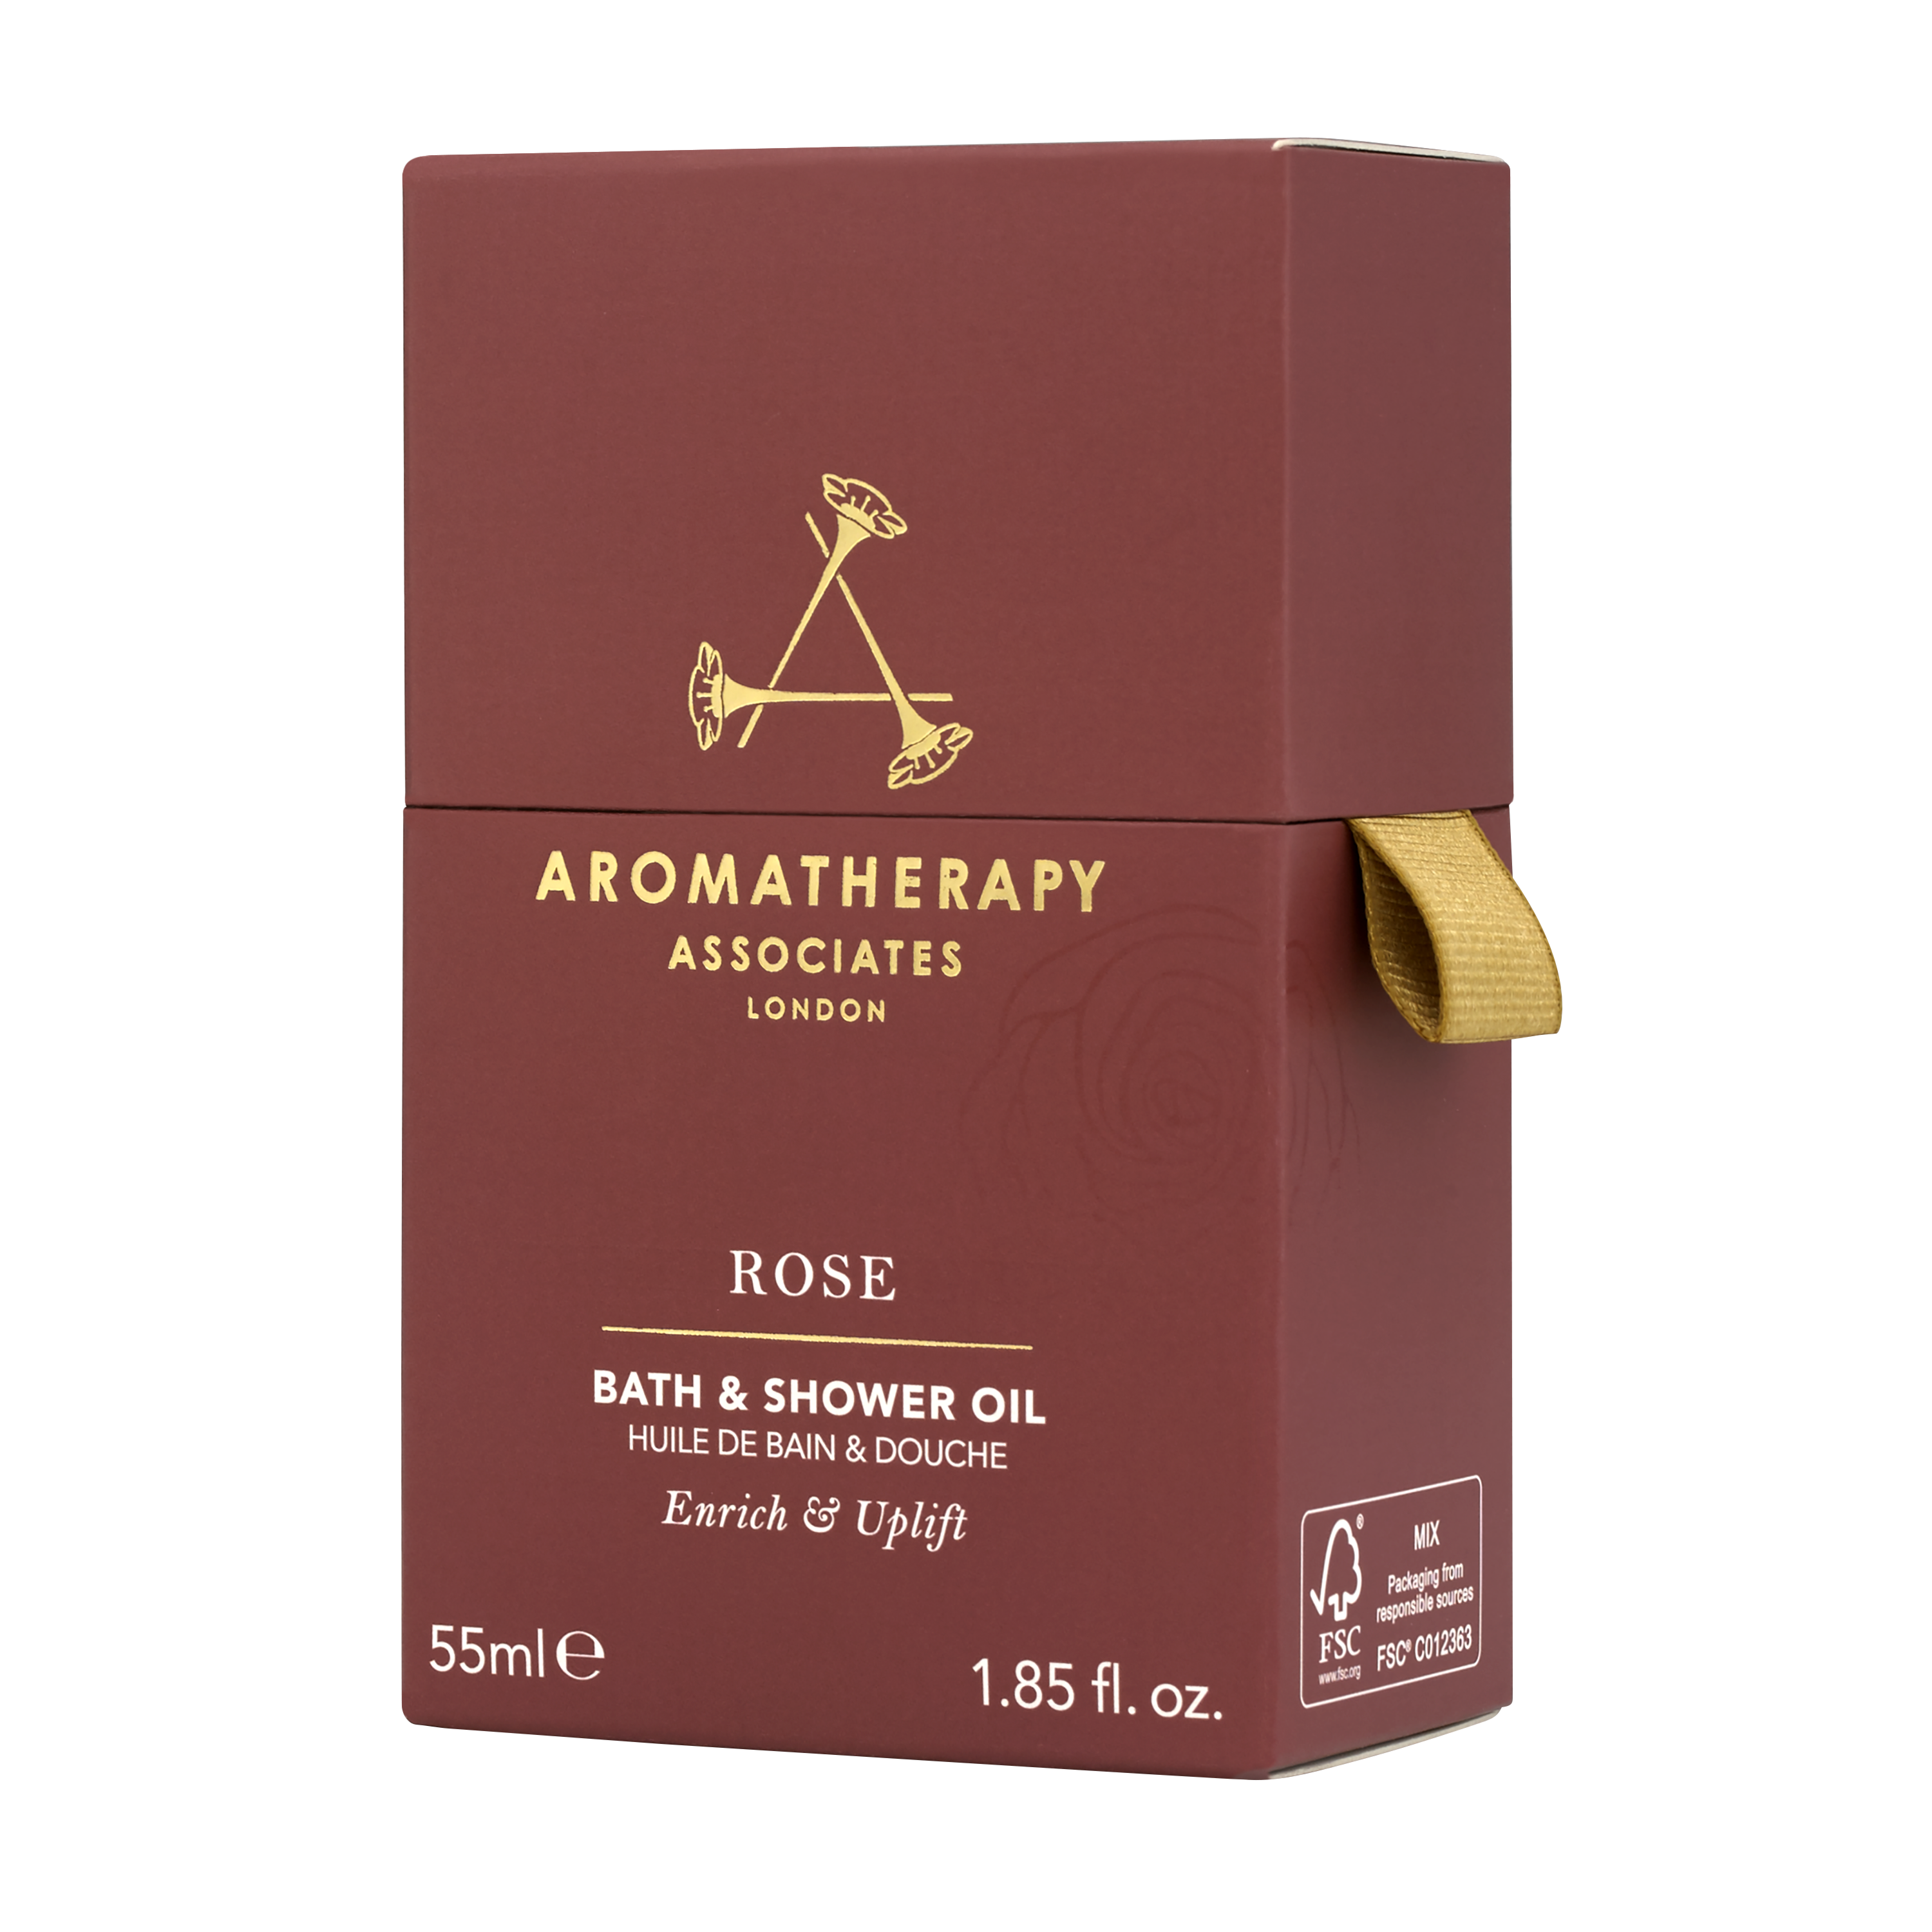 Rose Bath & Shower Oil 55ml Aromatherapy Associates